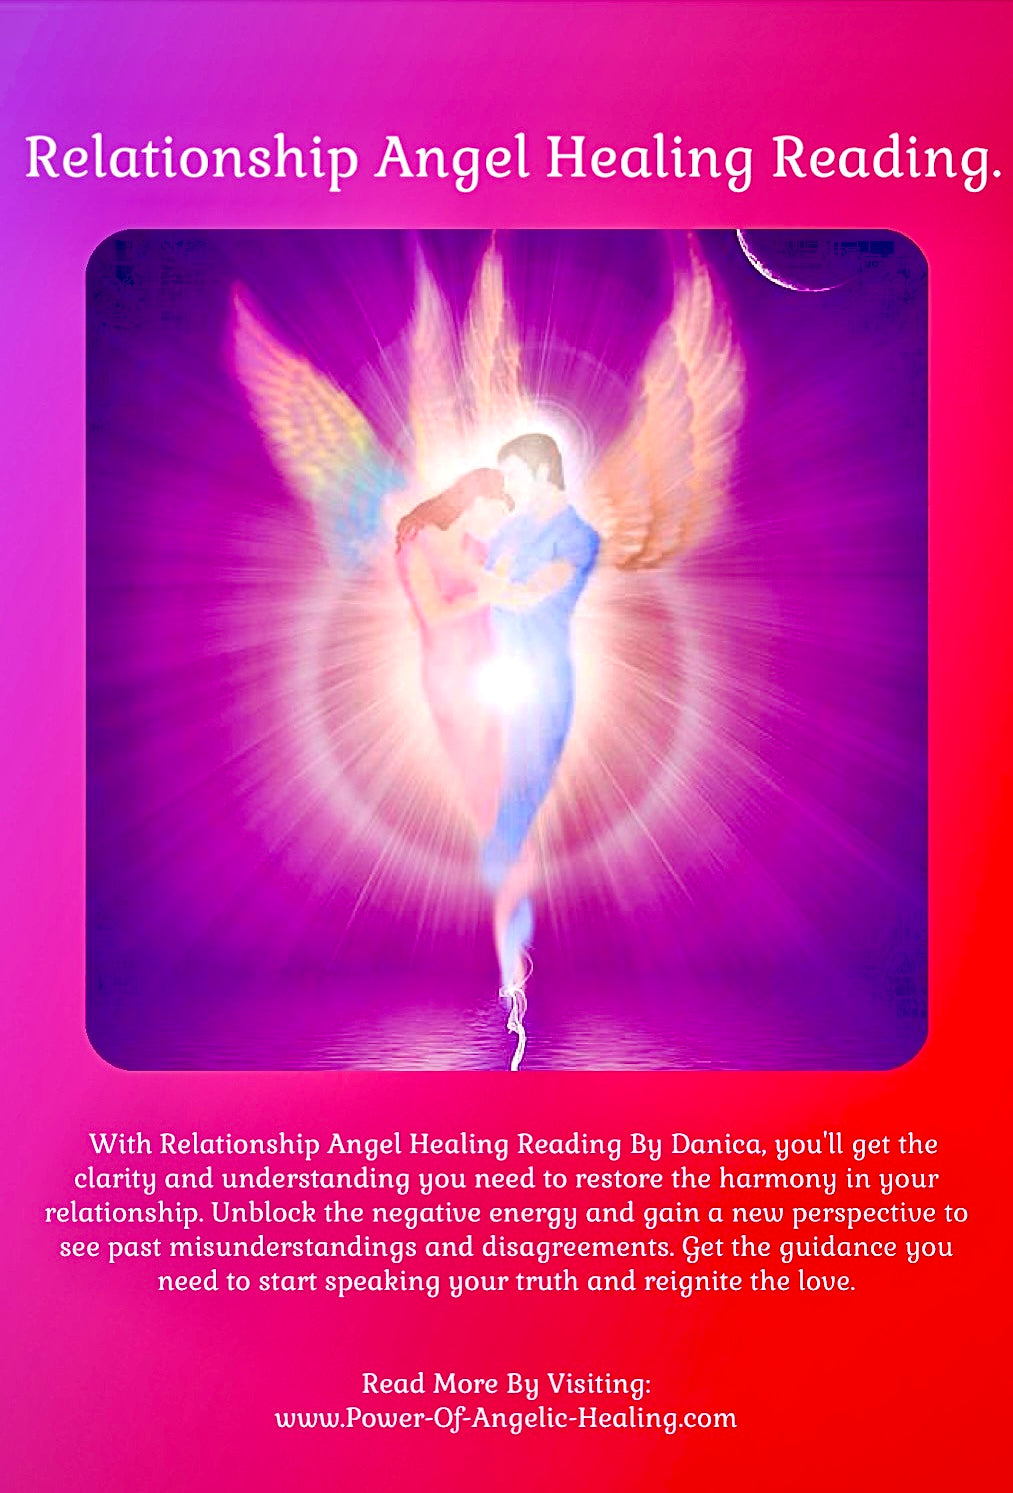 Relationship Angel Healing Reading.